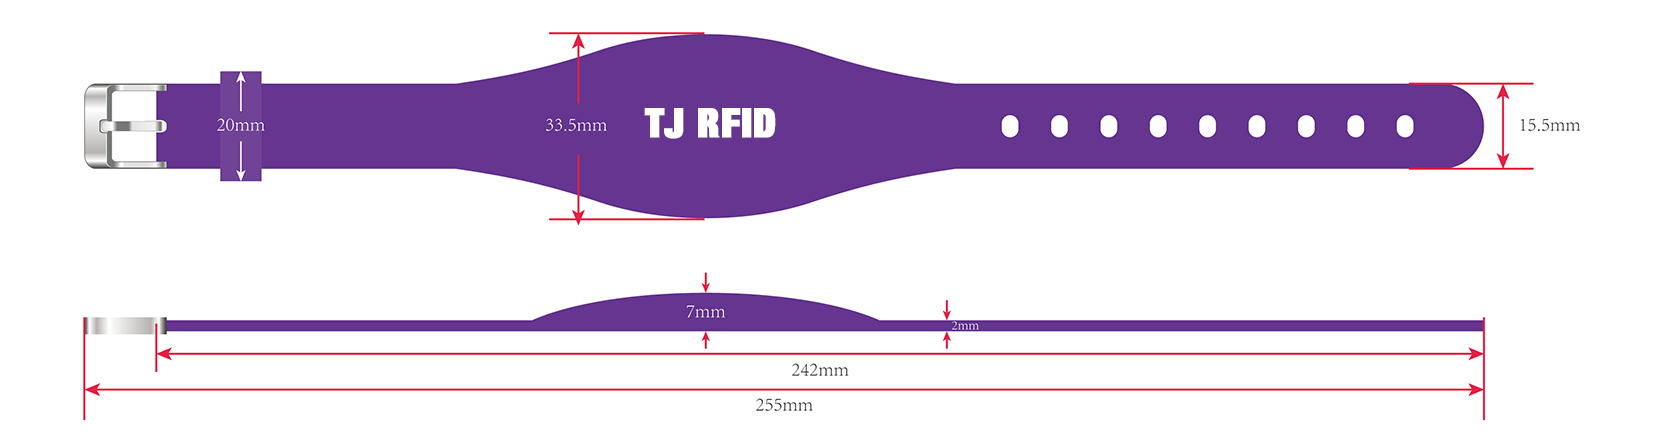 TRSB02-004 rfid silicone wristband size